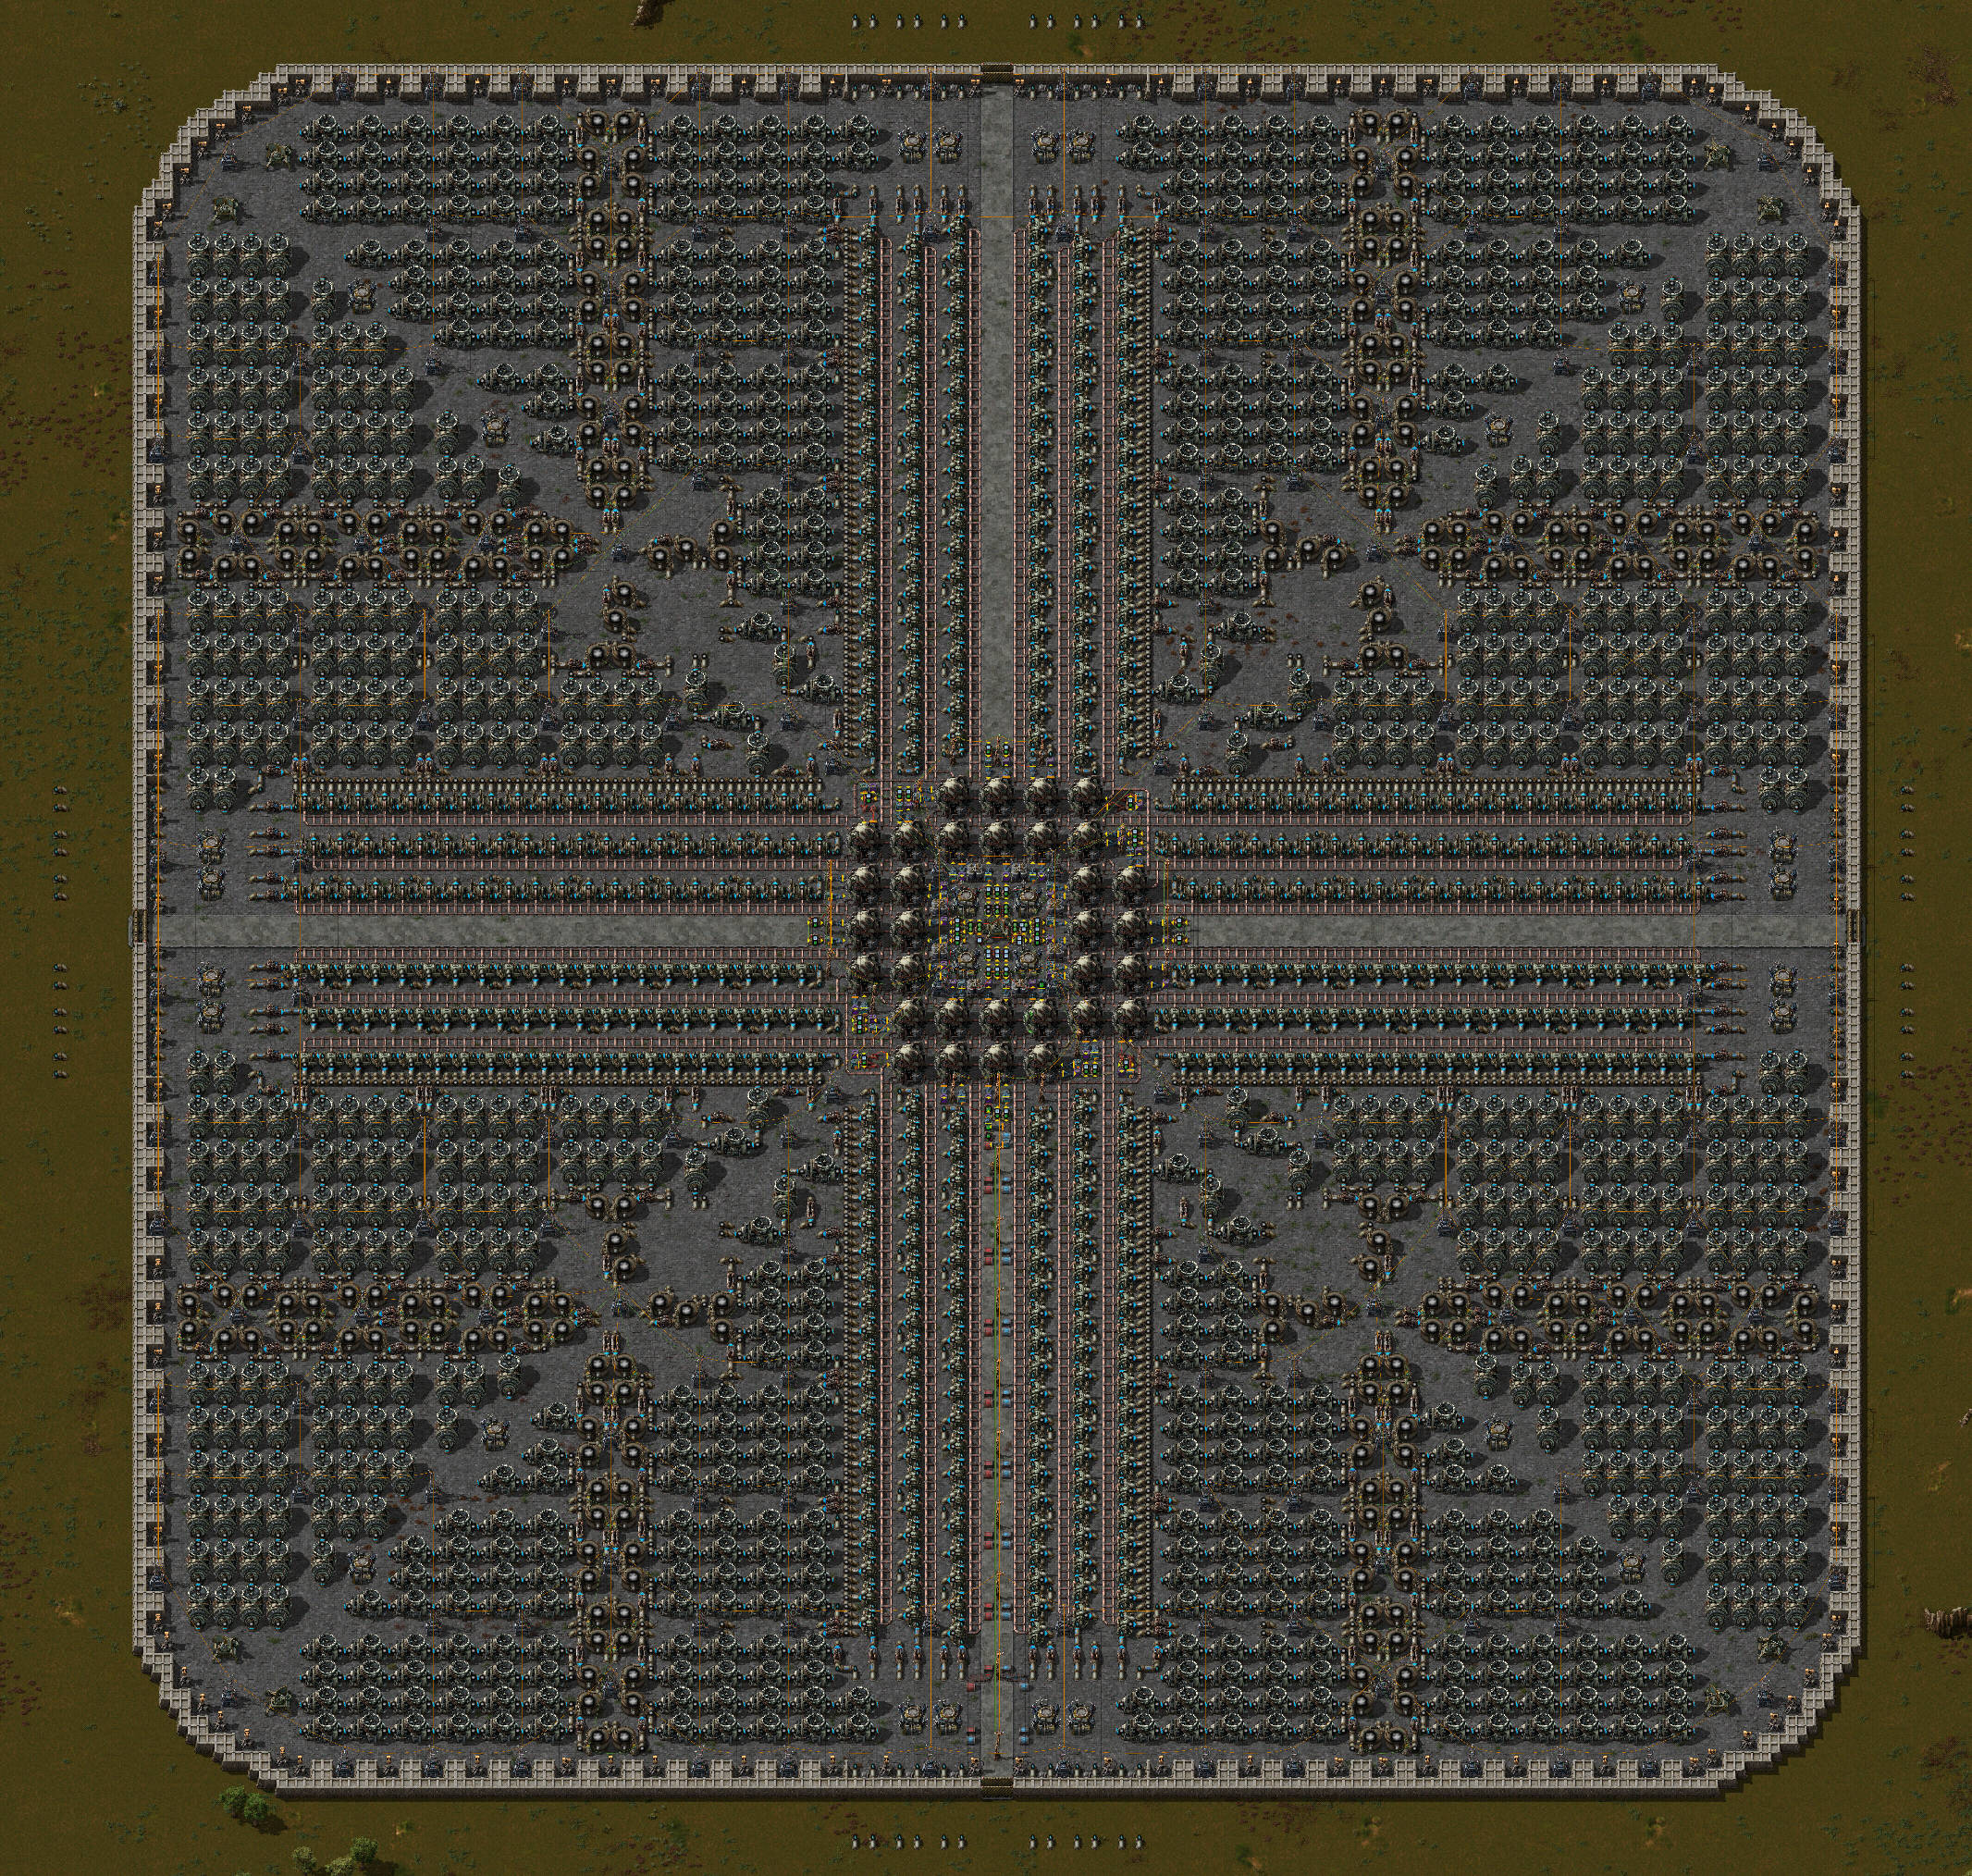 Reactor Overview